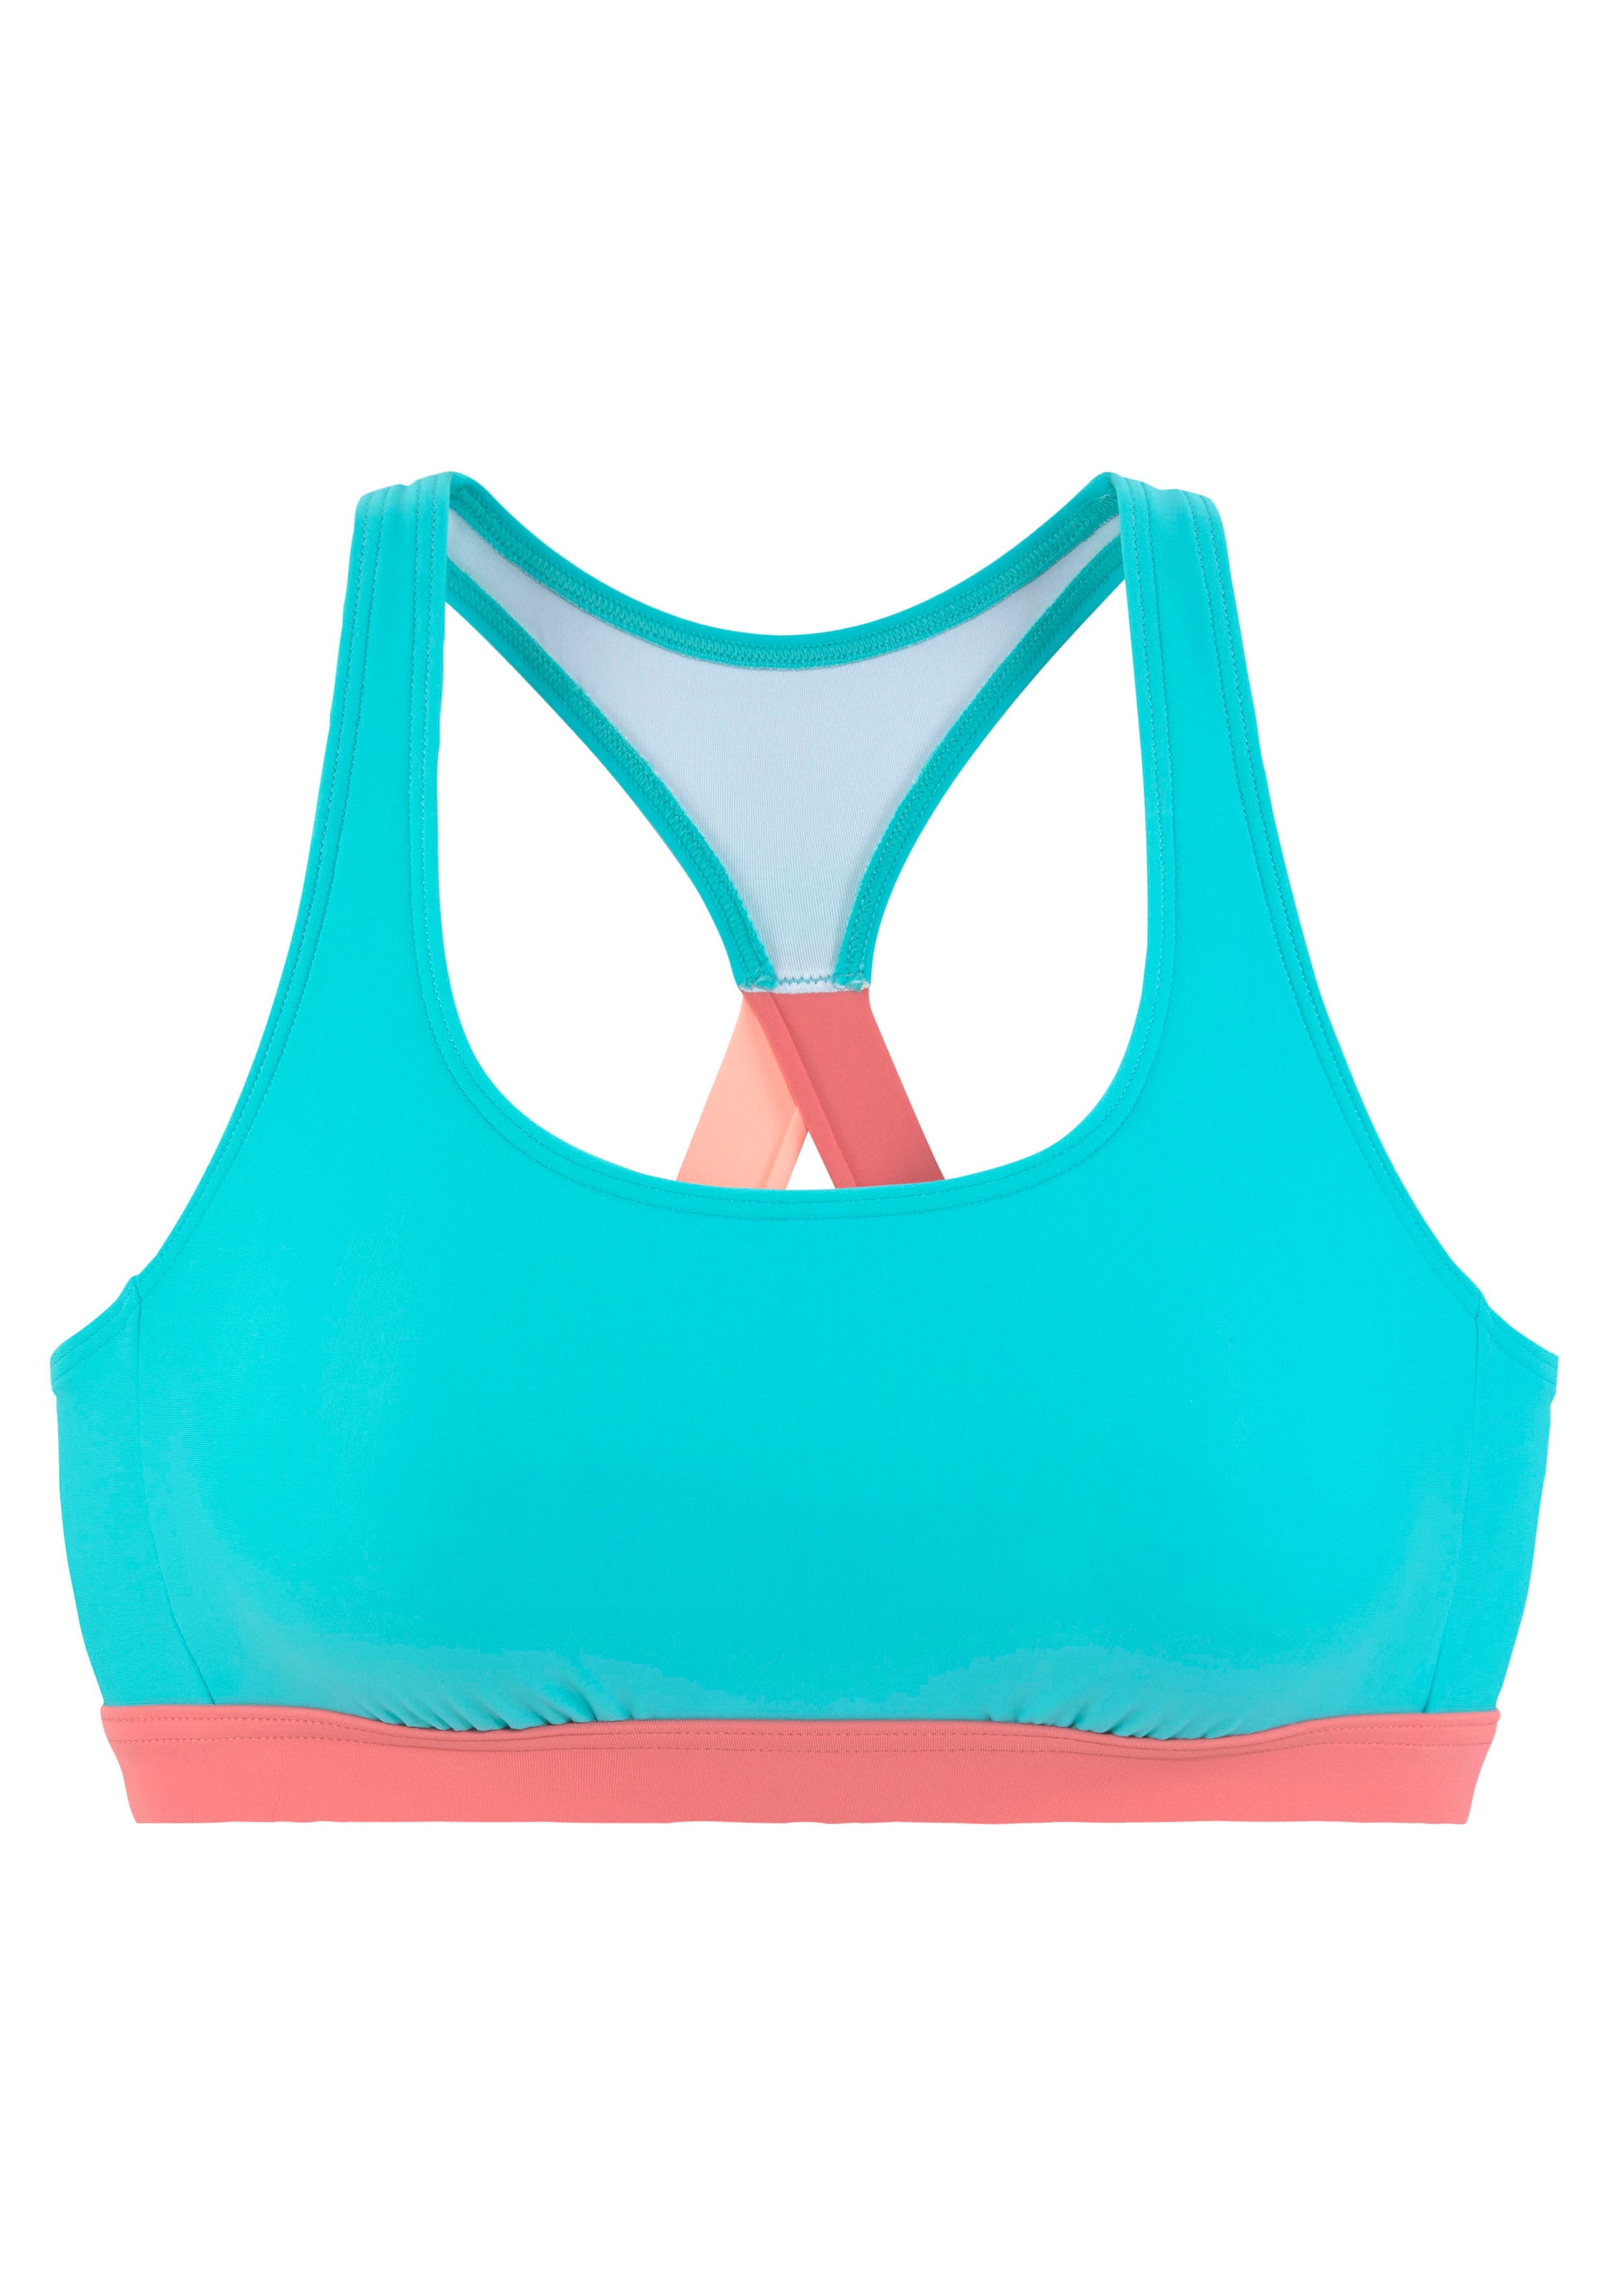 LASCANA ACTIVE Bustier-Bikini-Top »Janni«, Details mit kontrastfarbenen bei